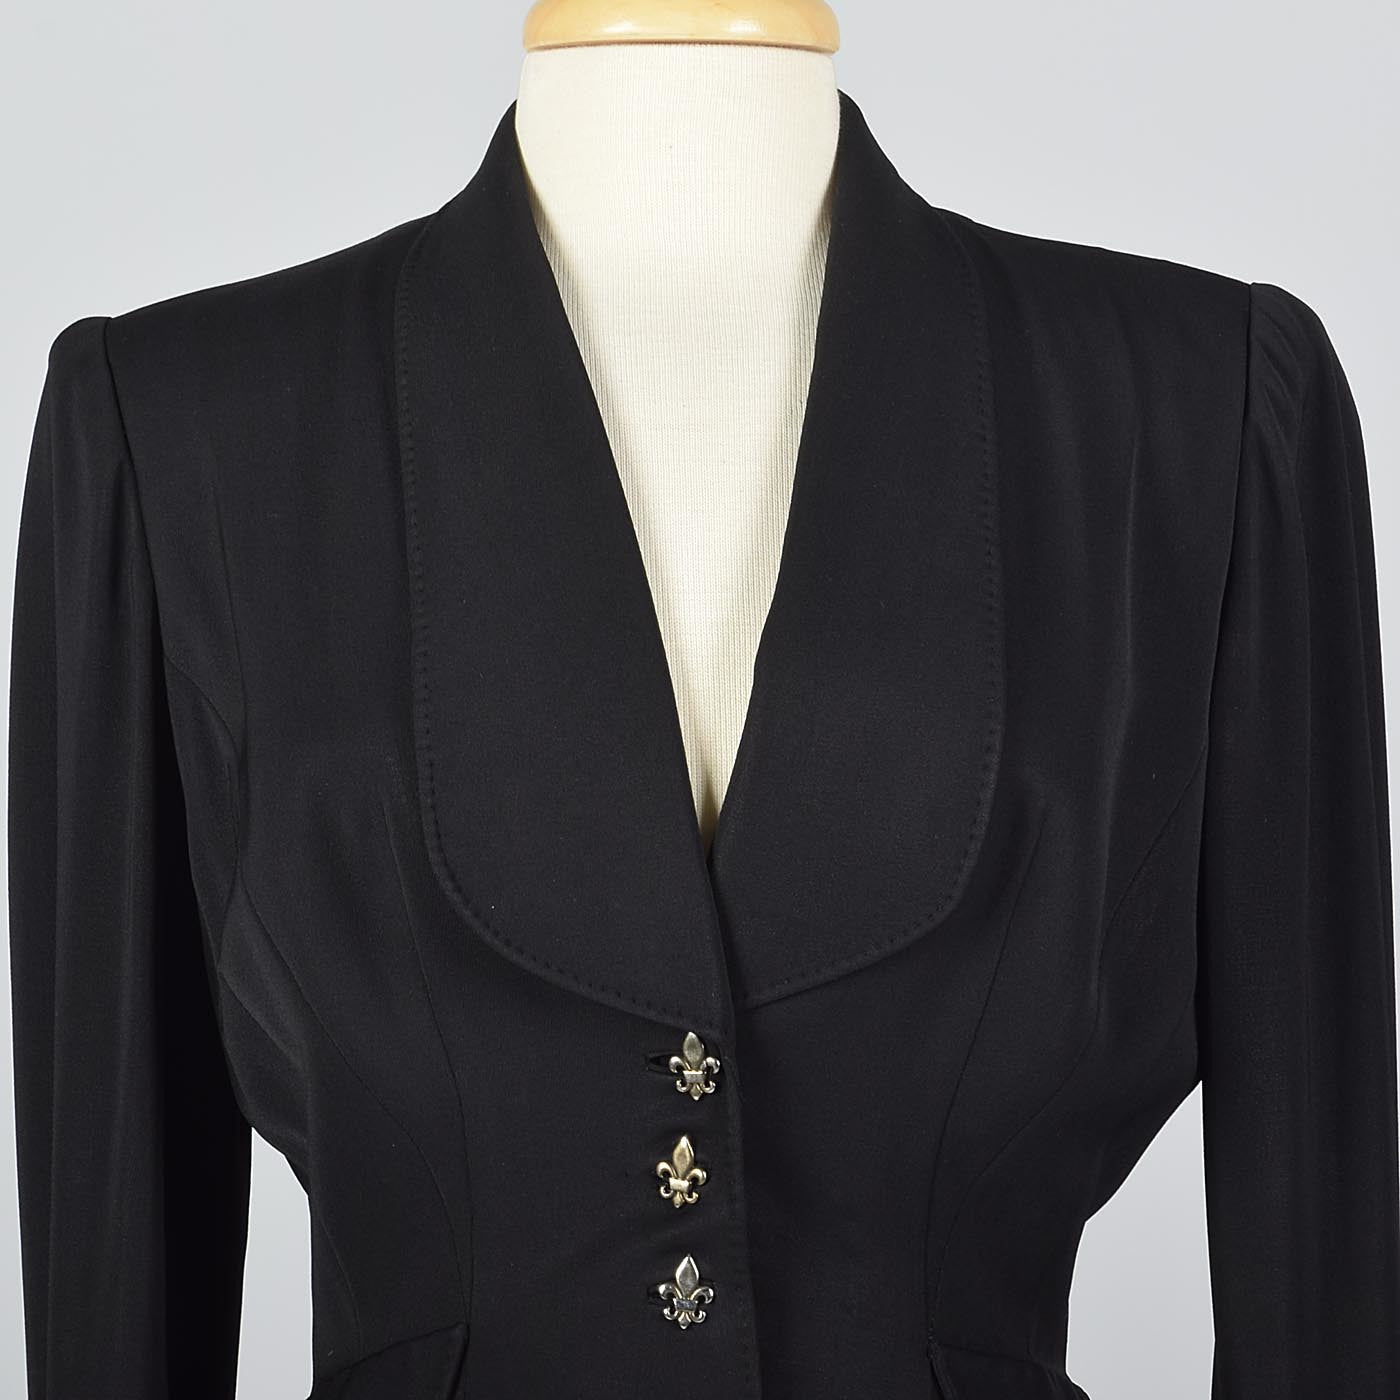 1950s Black Blazer with Shawl Collar